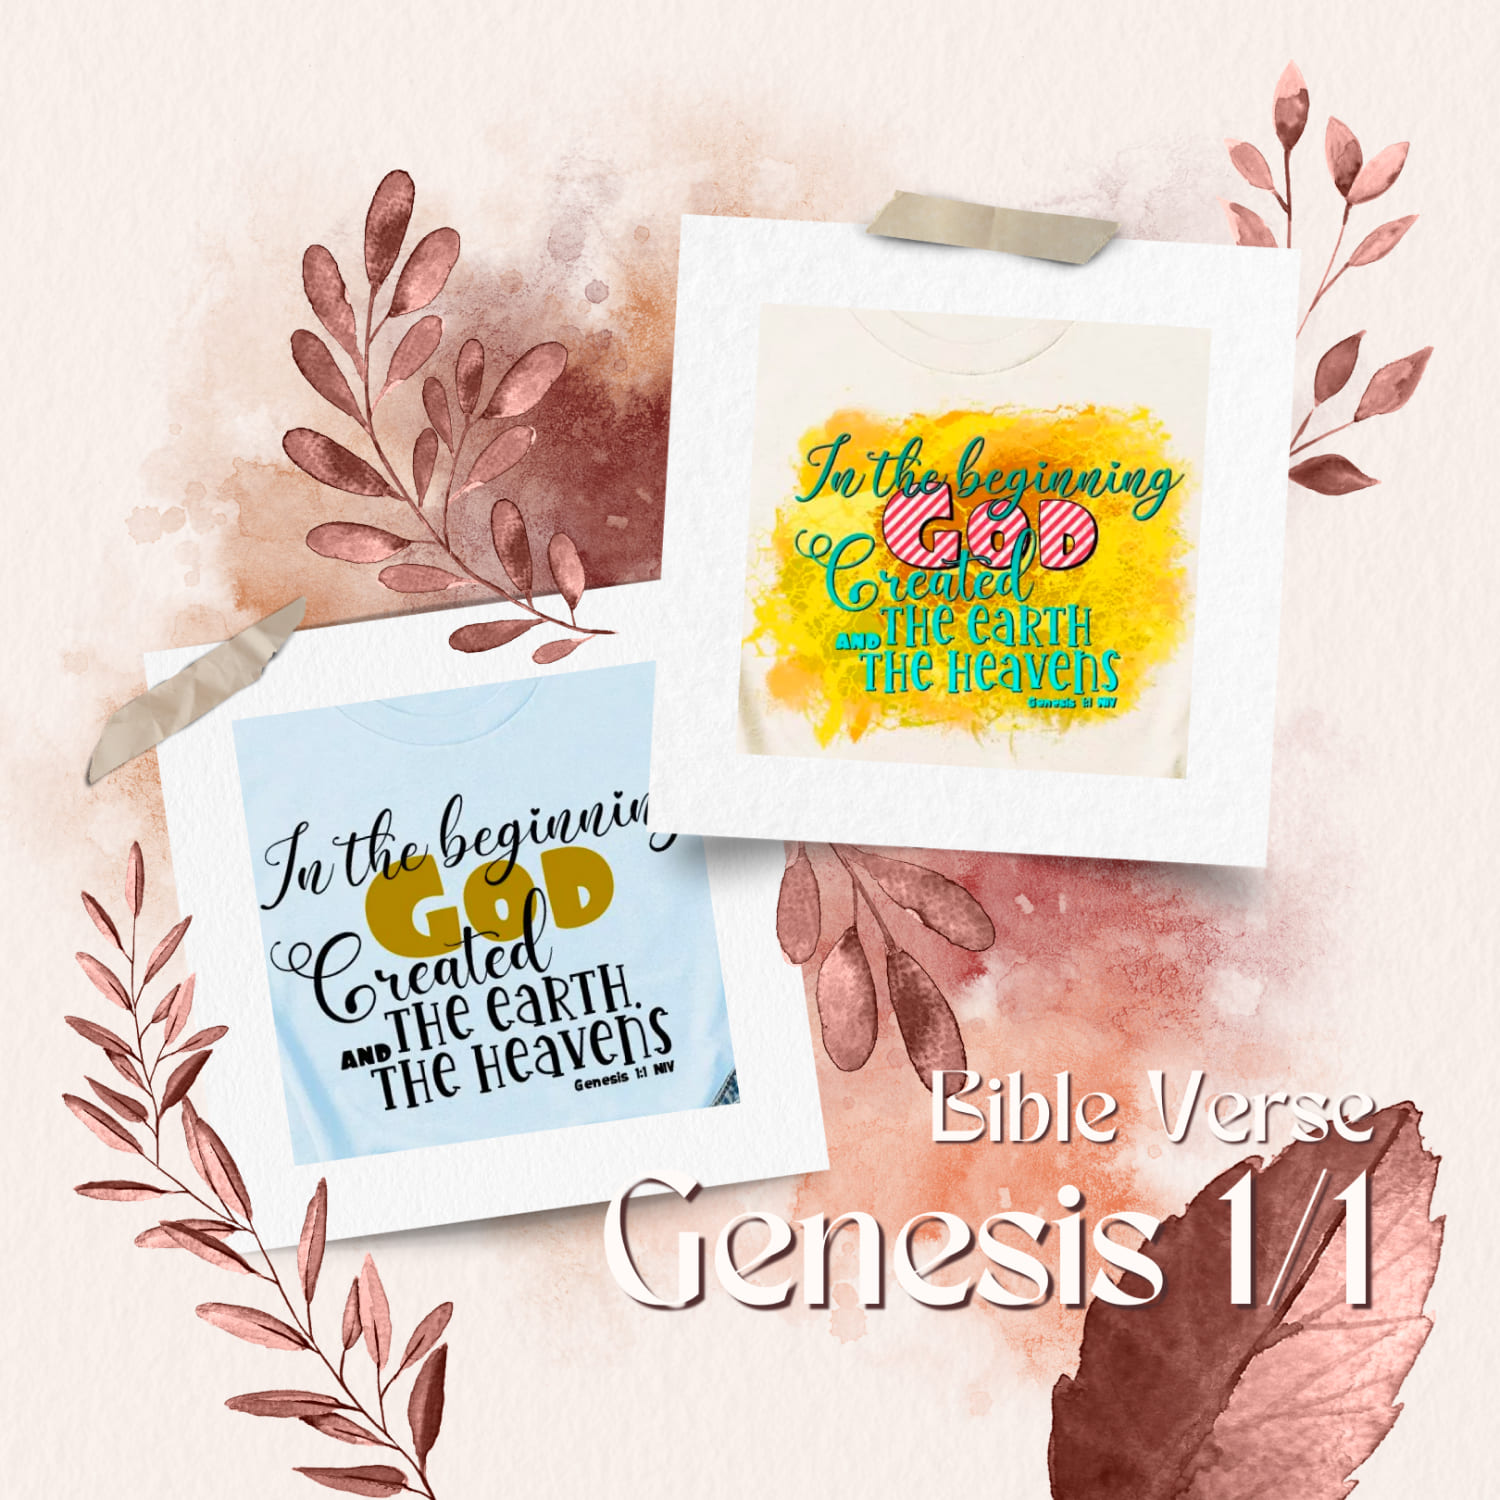 Genesis 1/1 Bible Verse - main image preview.